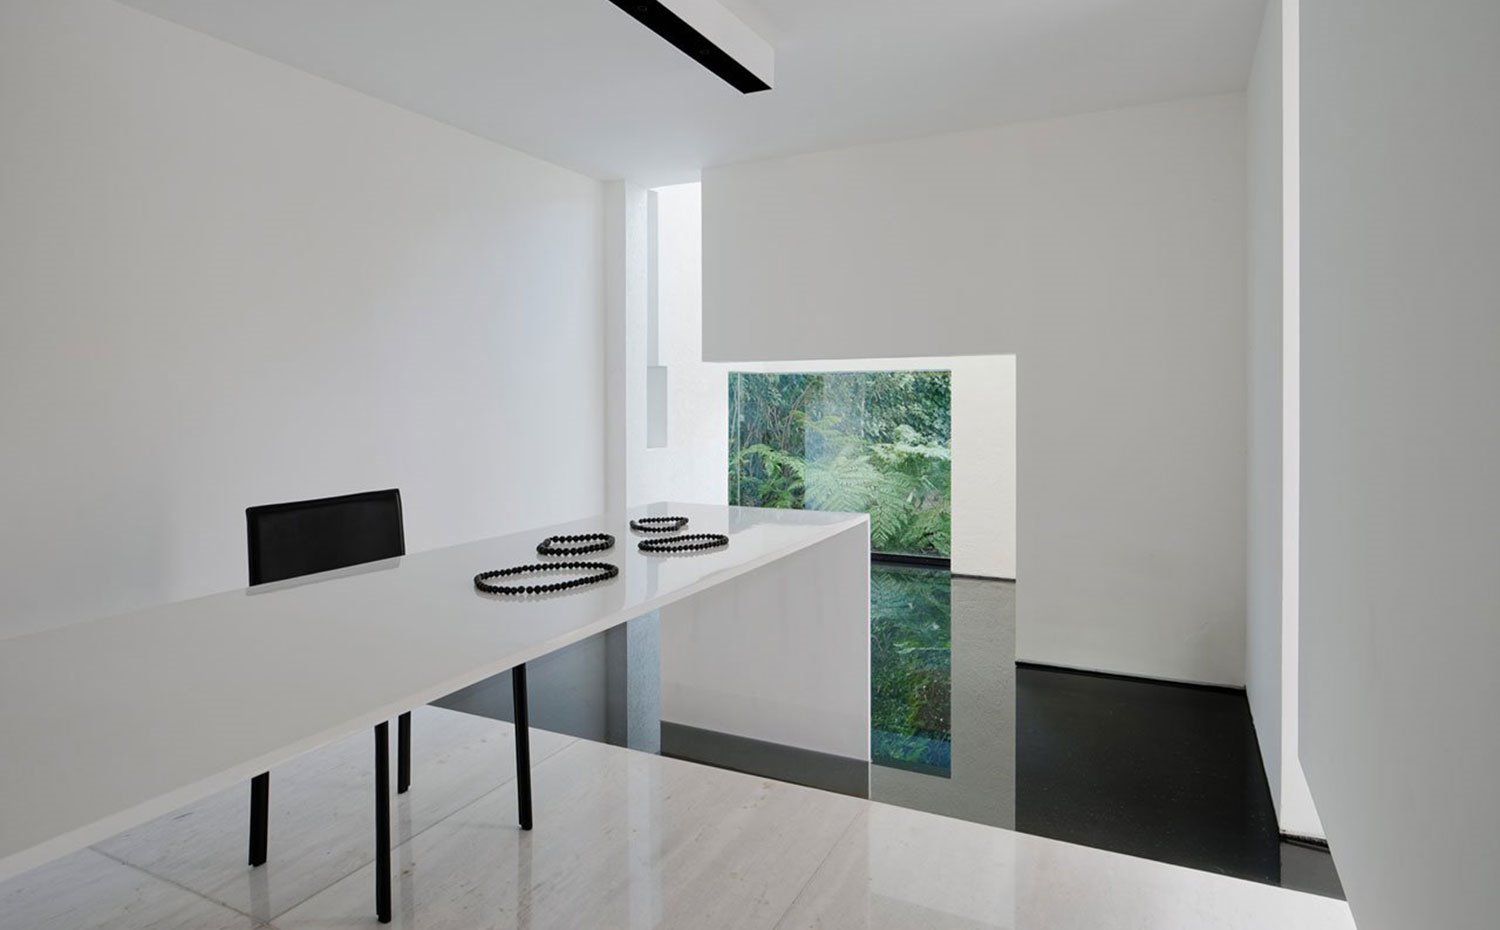 Paredes blancas, suelo de gresite, mesa alargada en blanco, silla negra, base de auga, apertura al exterior con vegetación